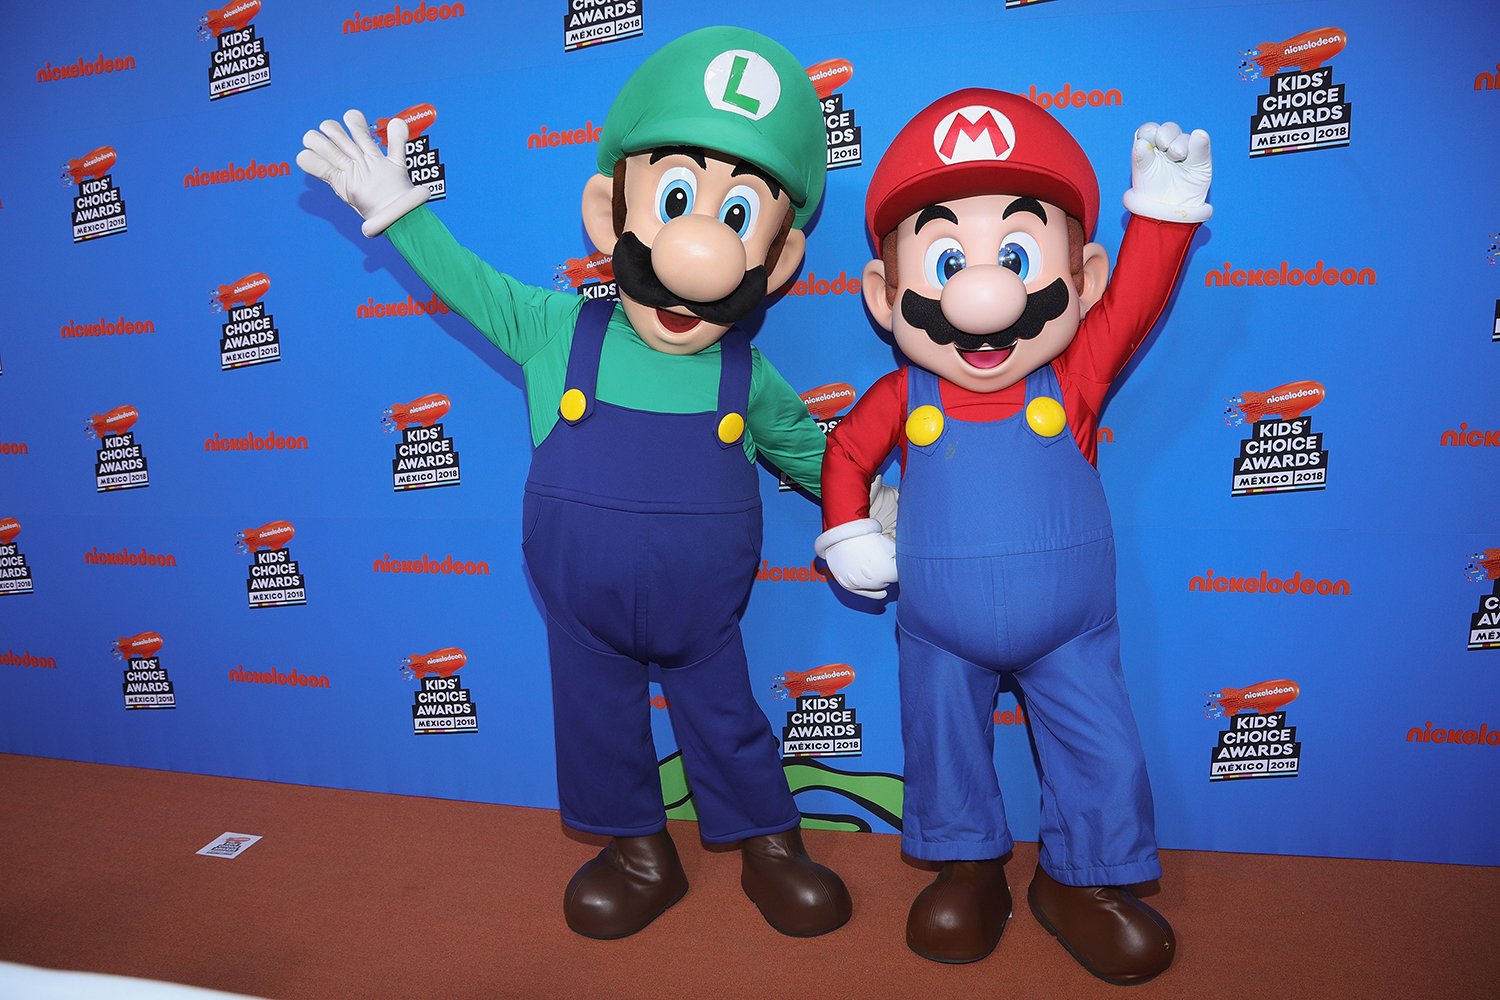 Super Mario Bros. Movie's Netflix Streaming Release Window Revealed